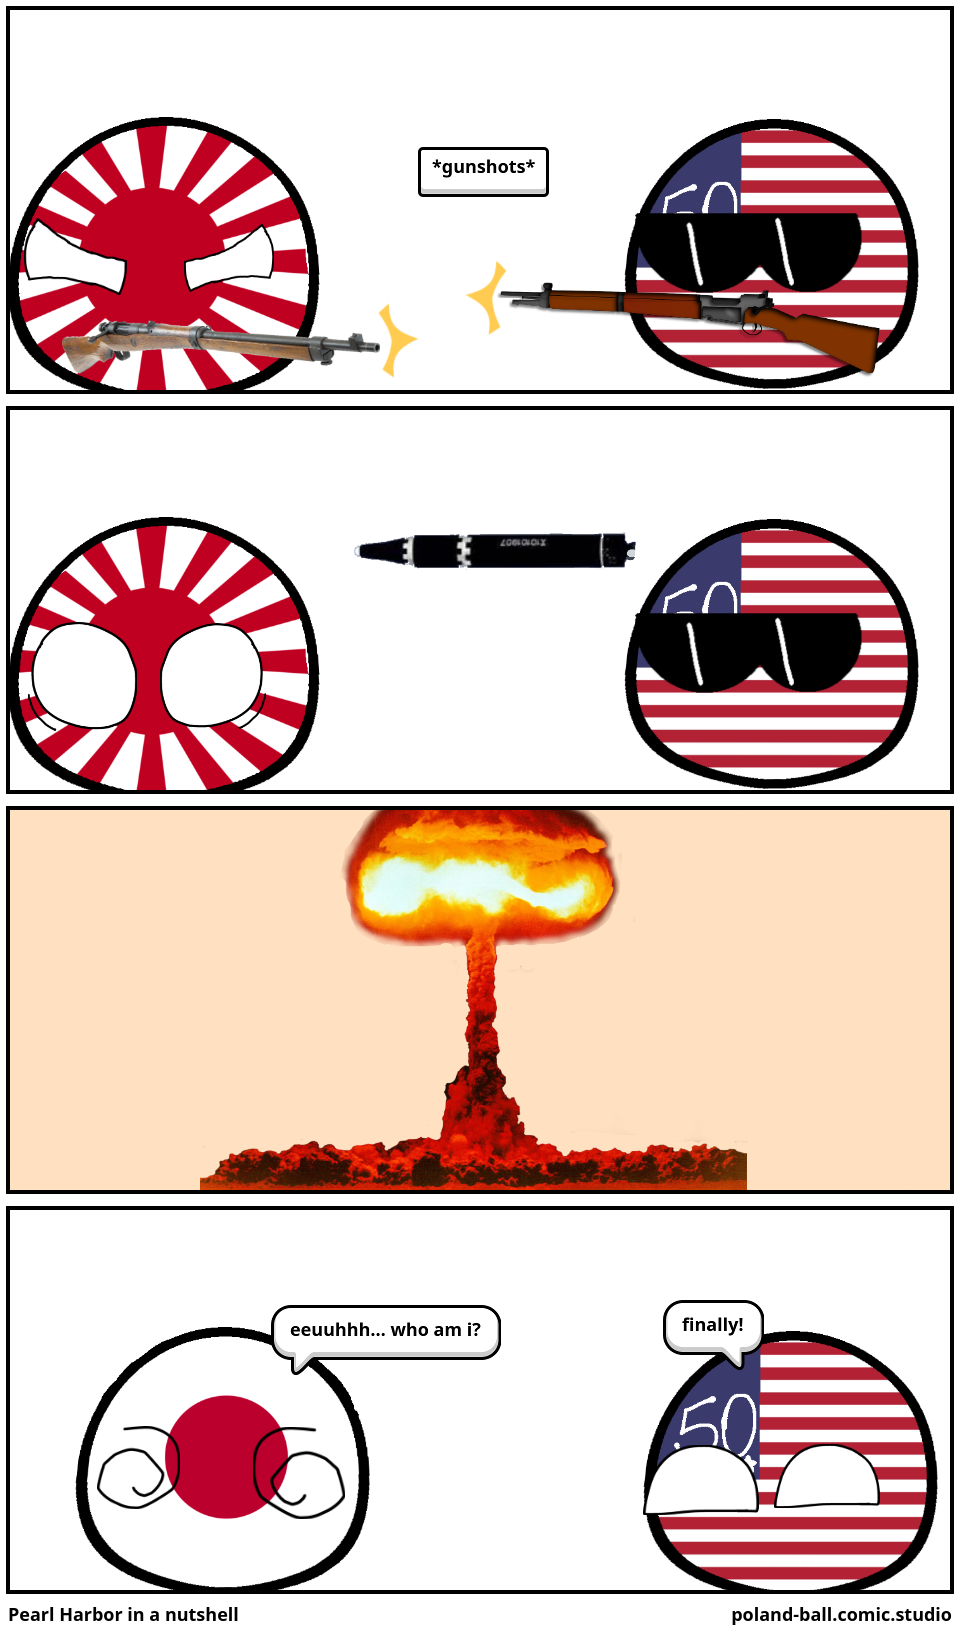 Pearl Harbor in a nutshell